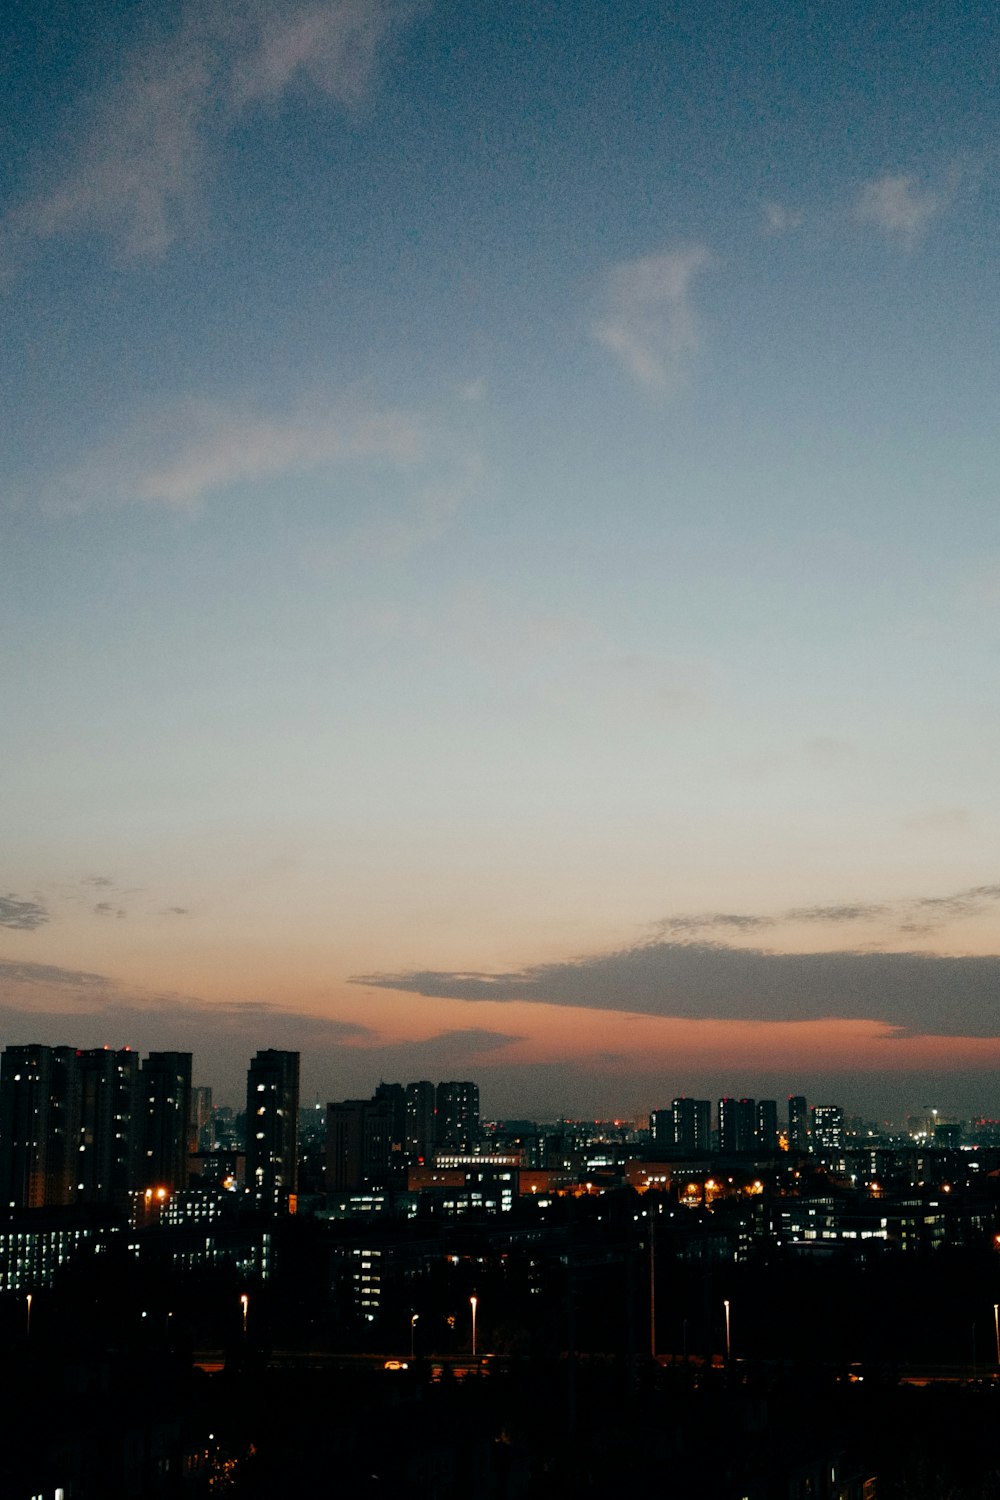 city skyline under blue sky during sunset